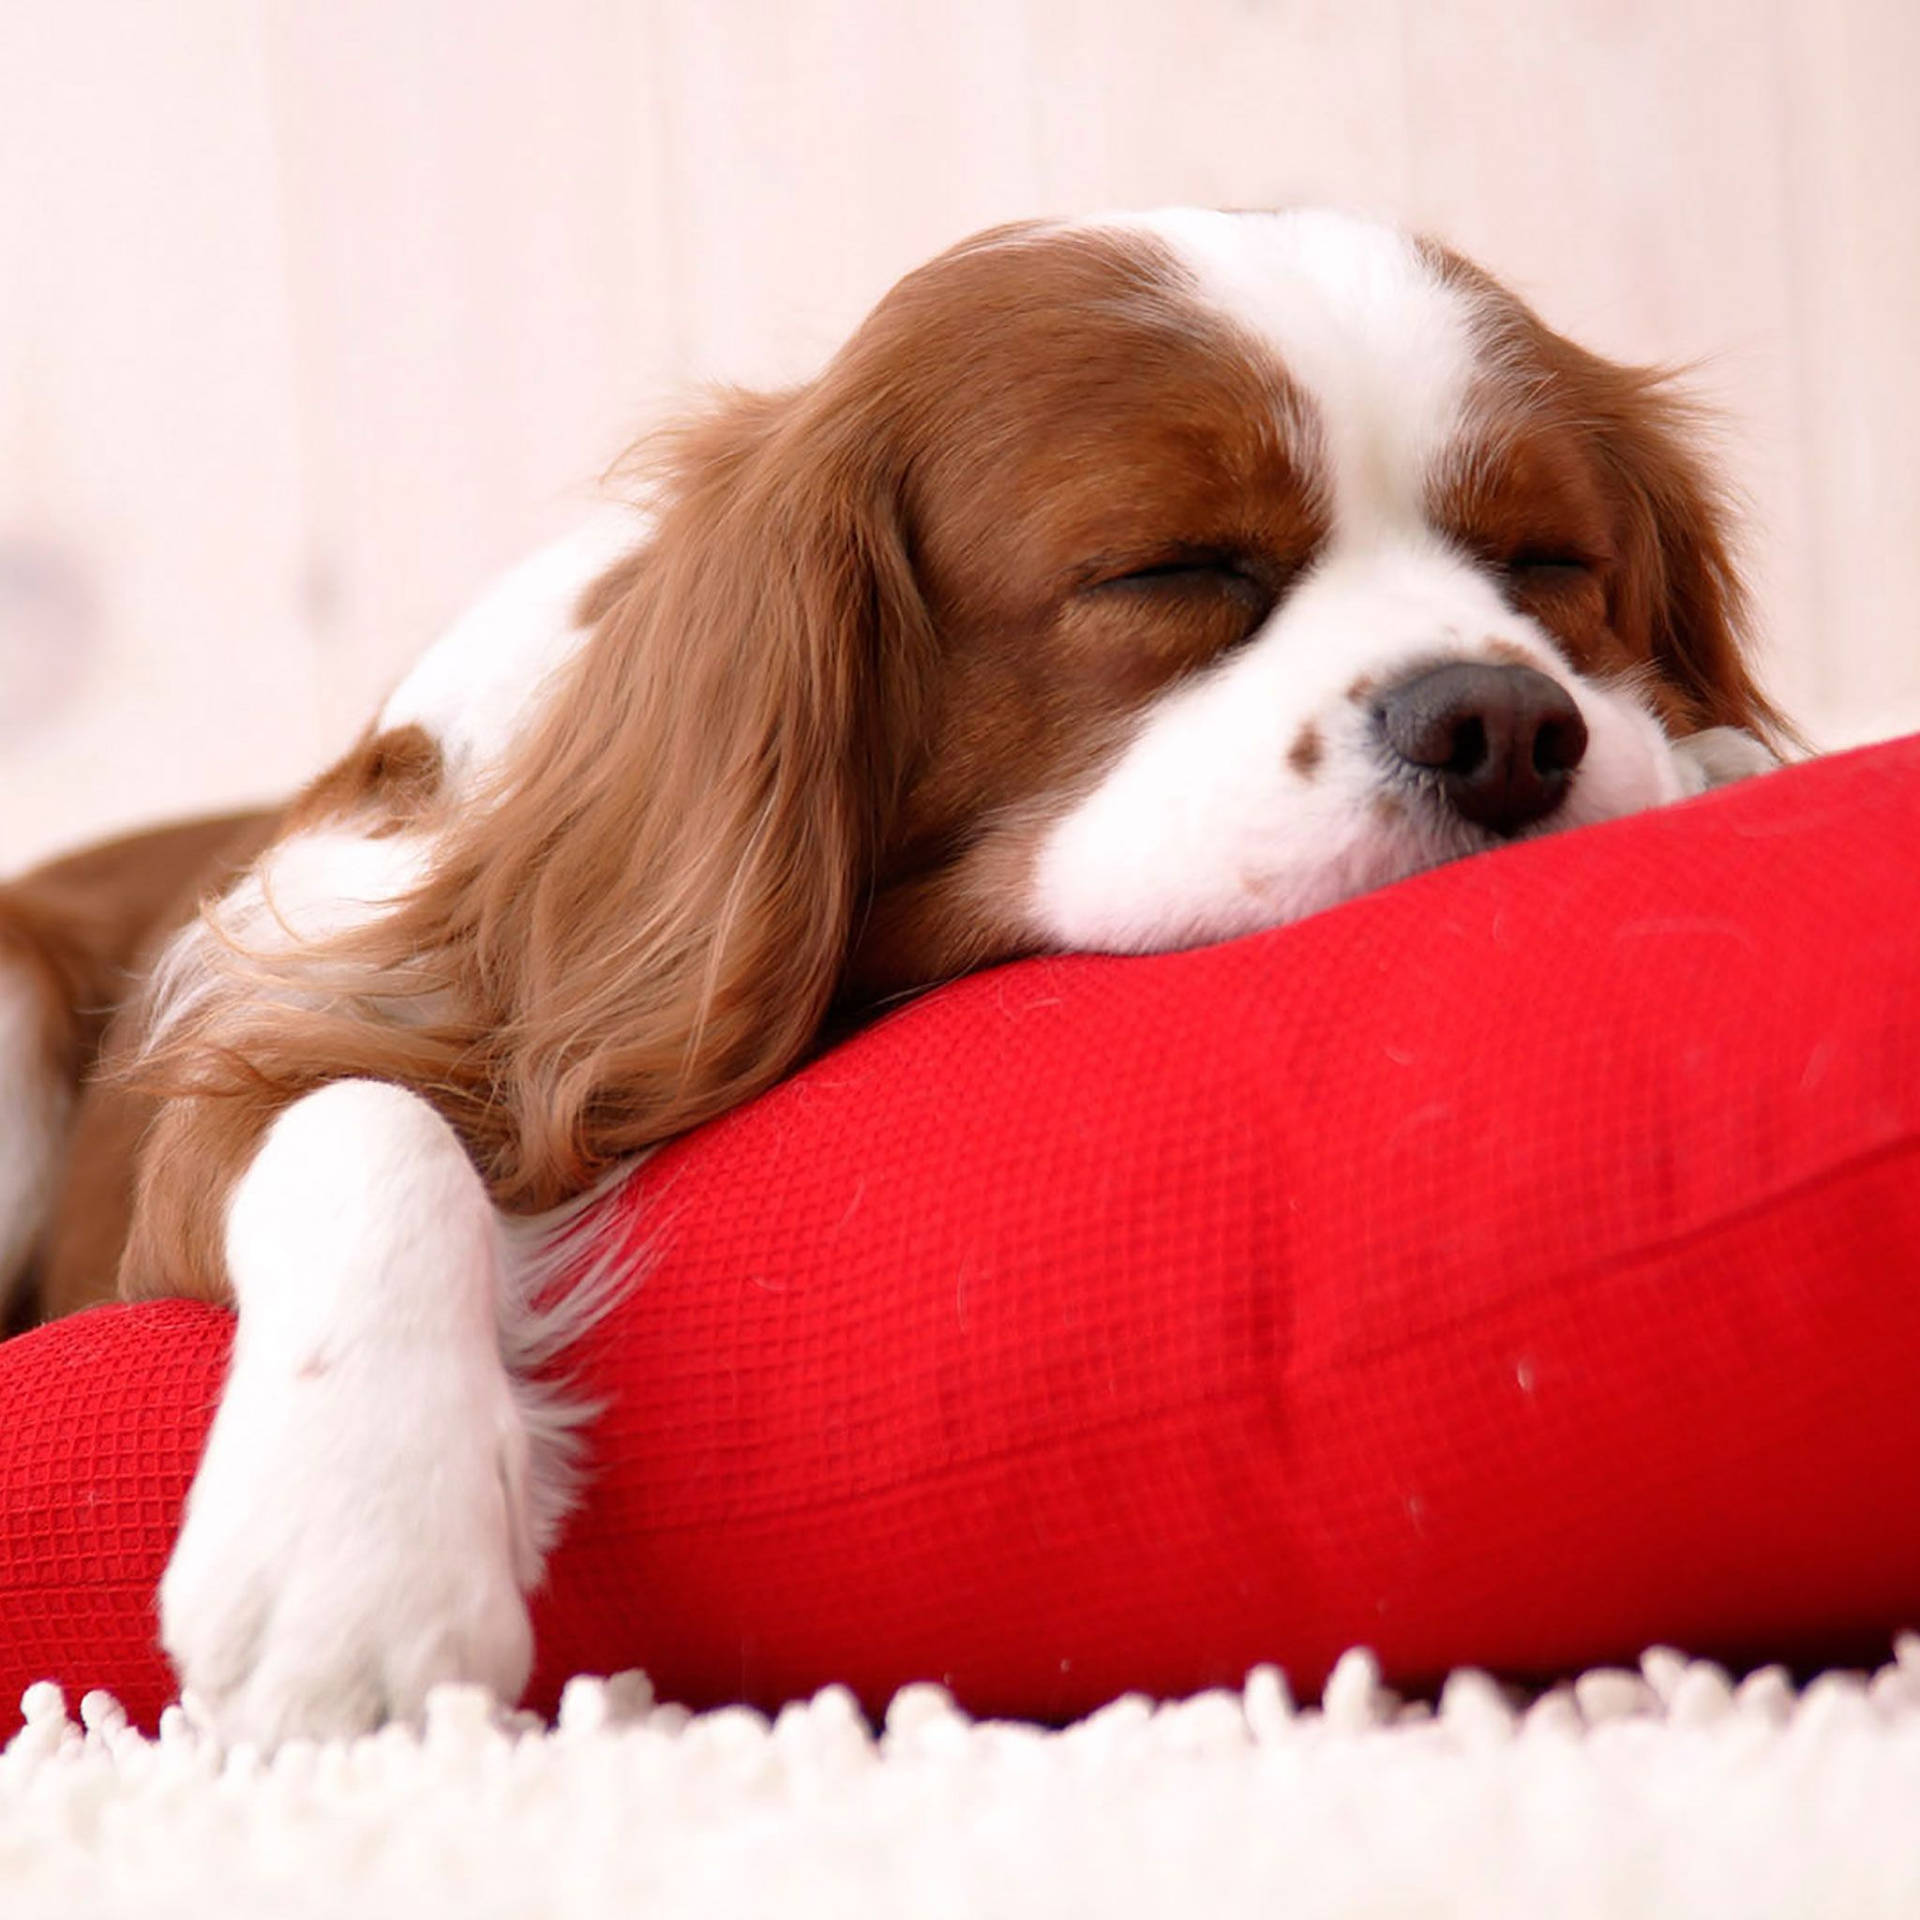 Sleeping Cavalier King Charles Spaniel Dog Wallpaper